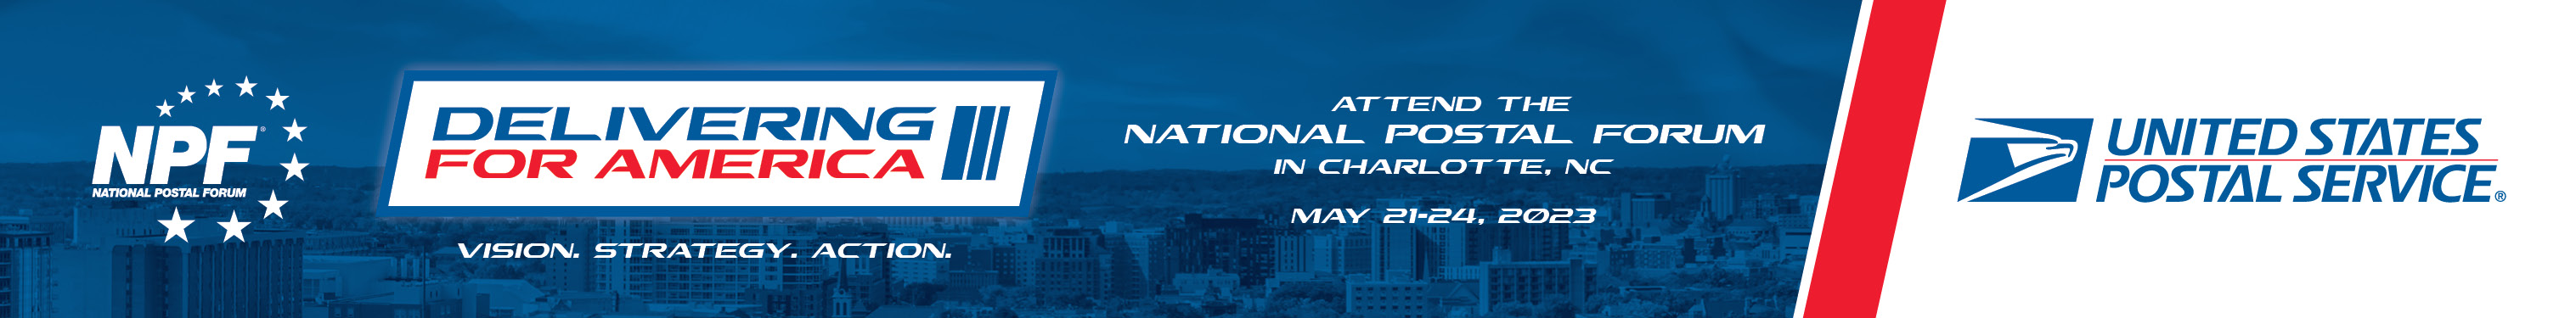 National Postal Forum 2023 - Charlotte